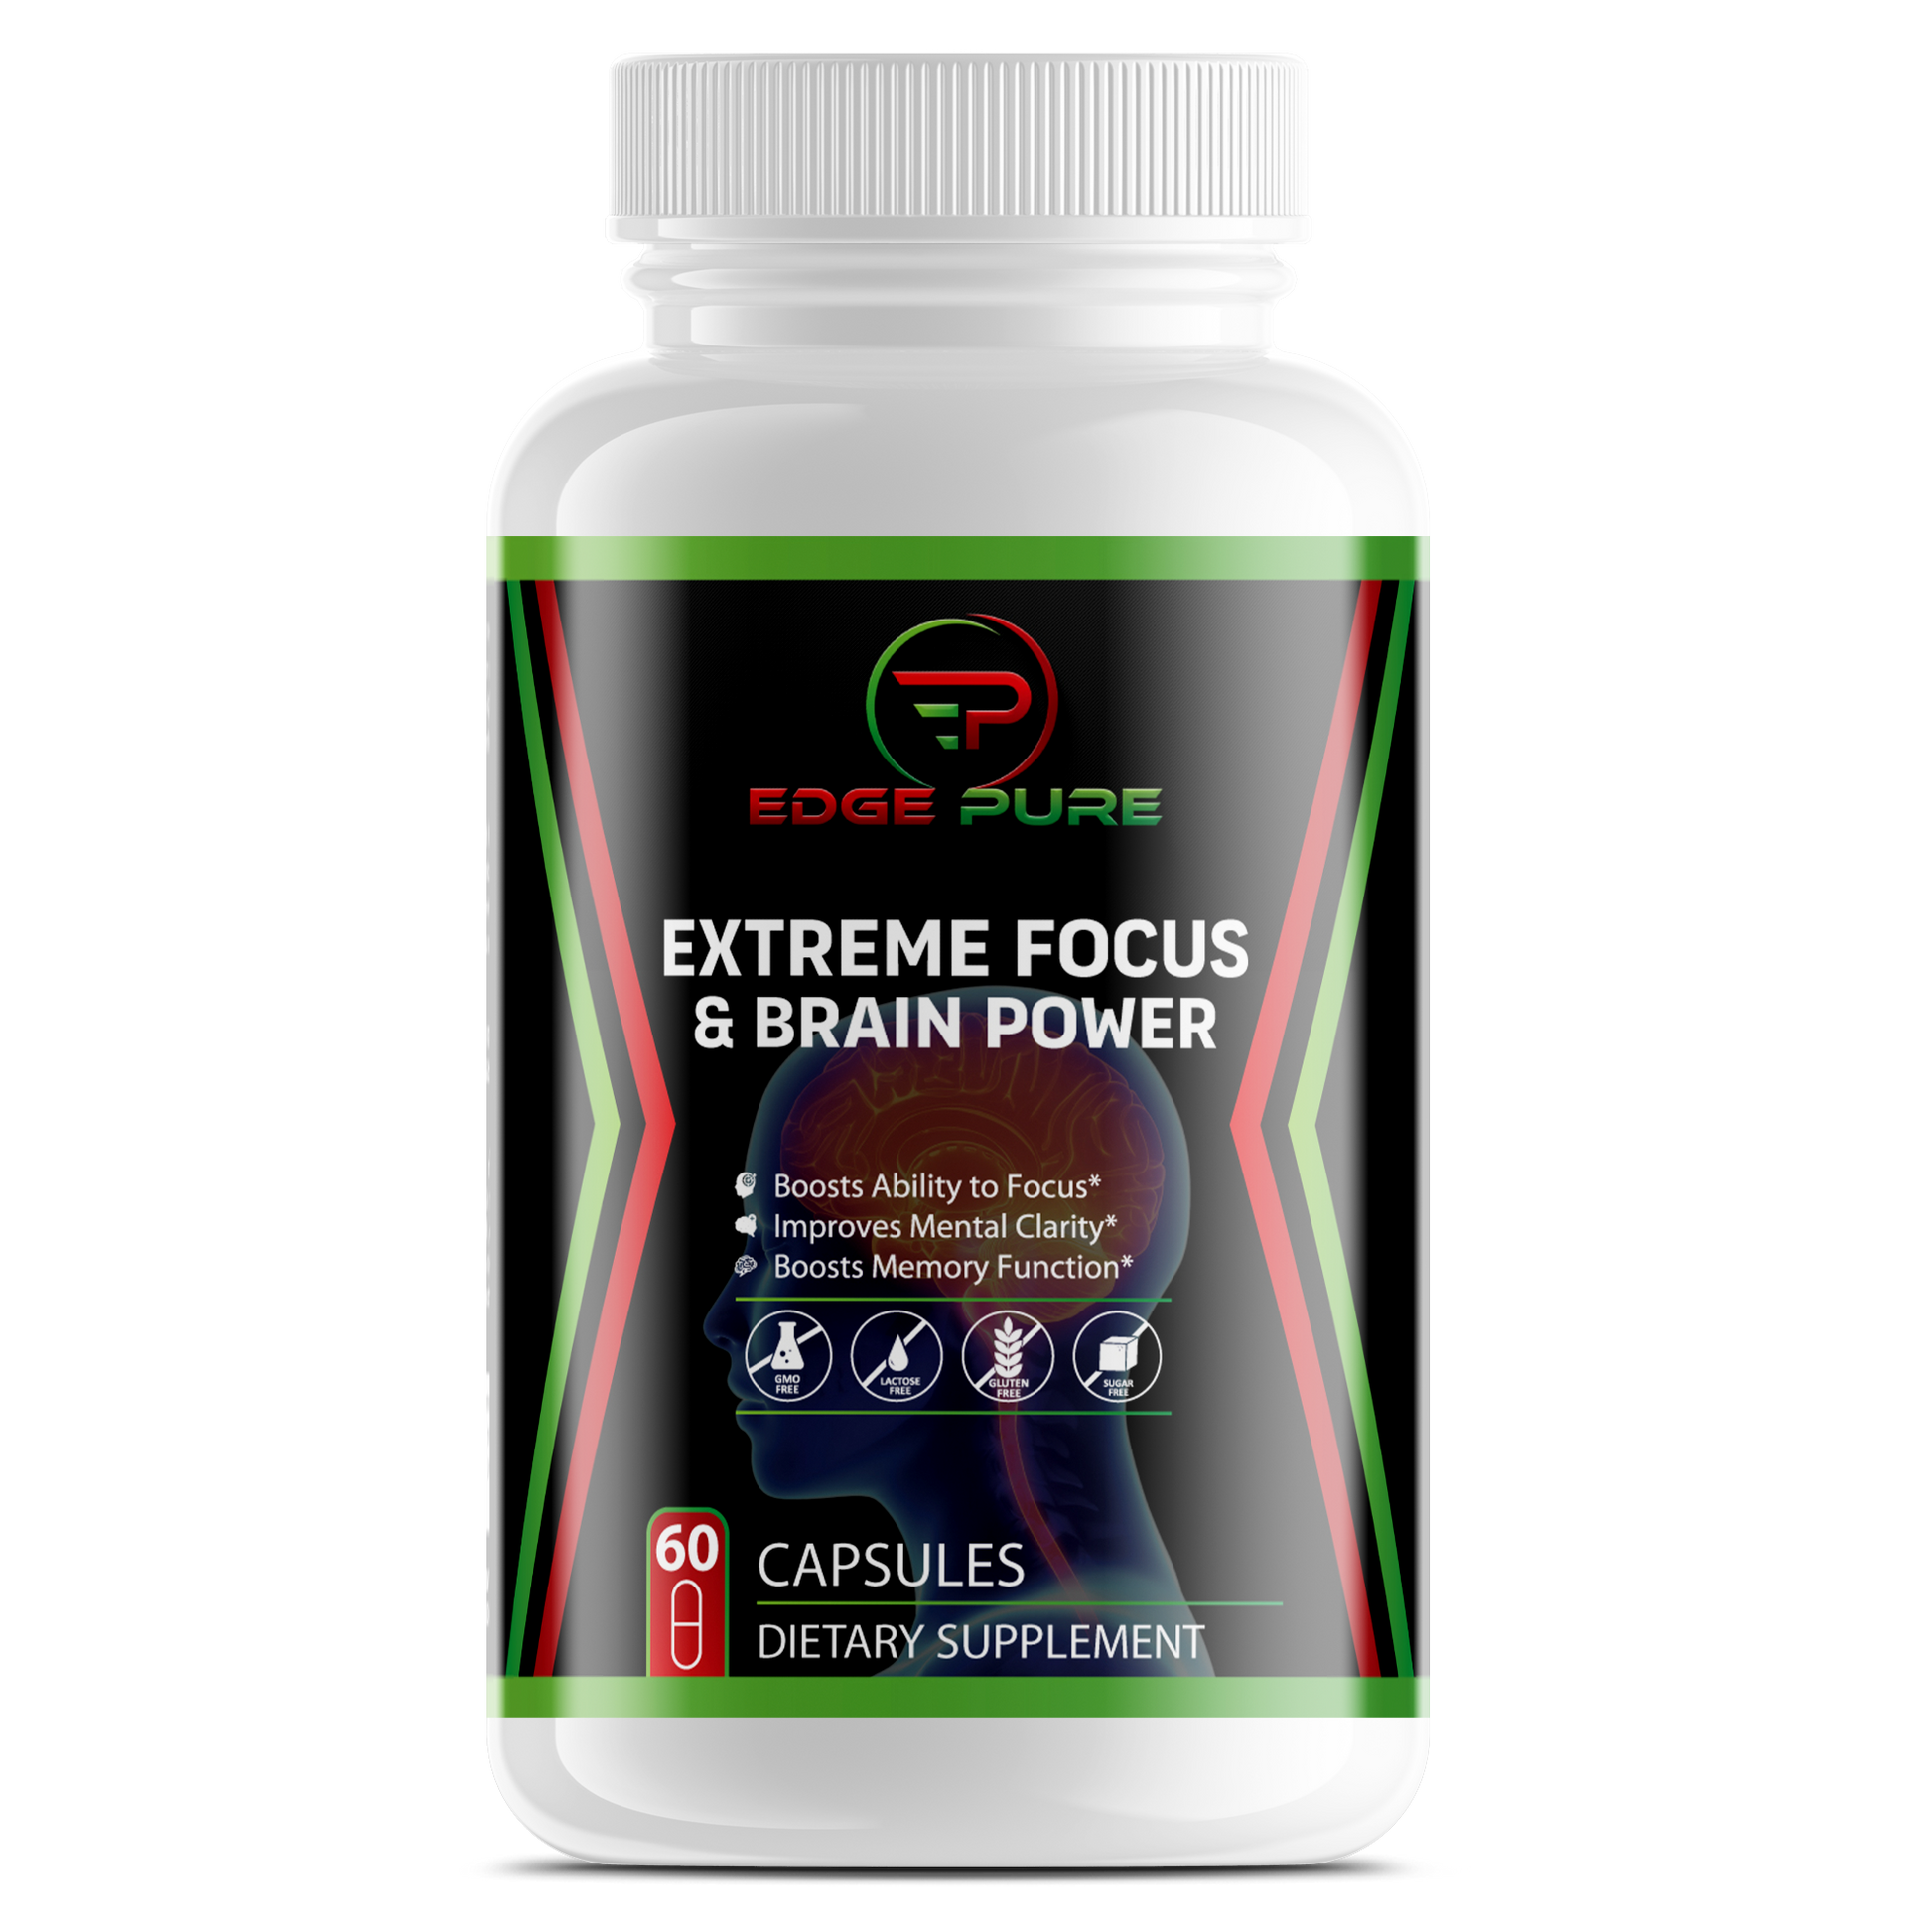 Extreme Focus & Brain Power Edge Pure